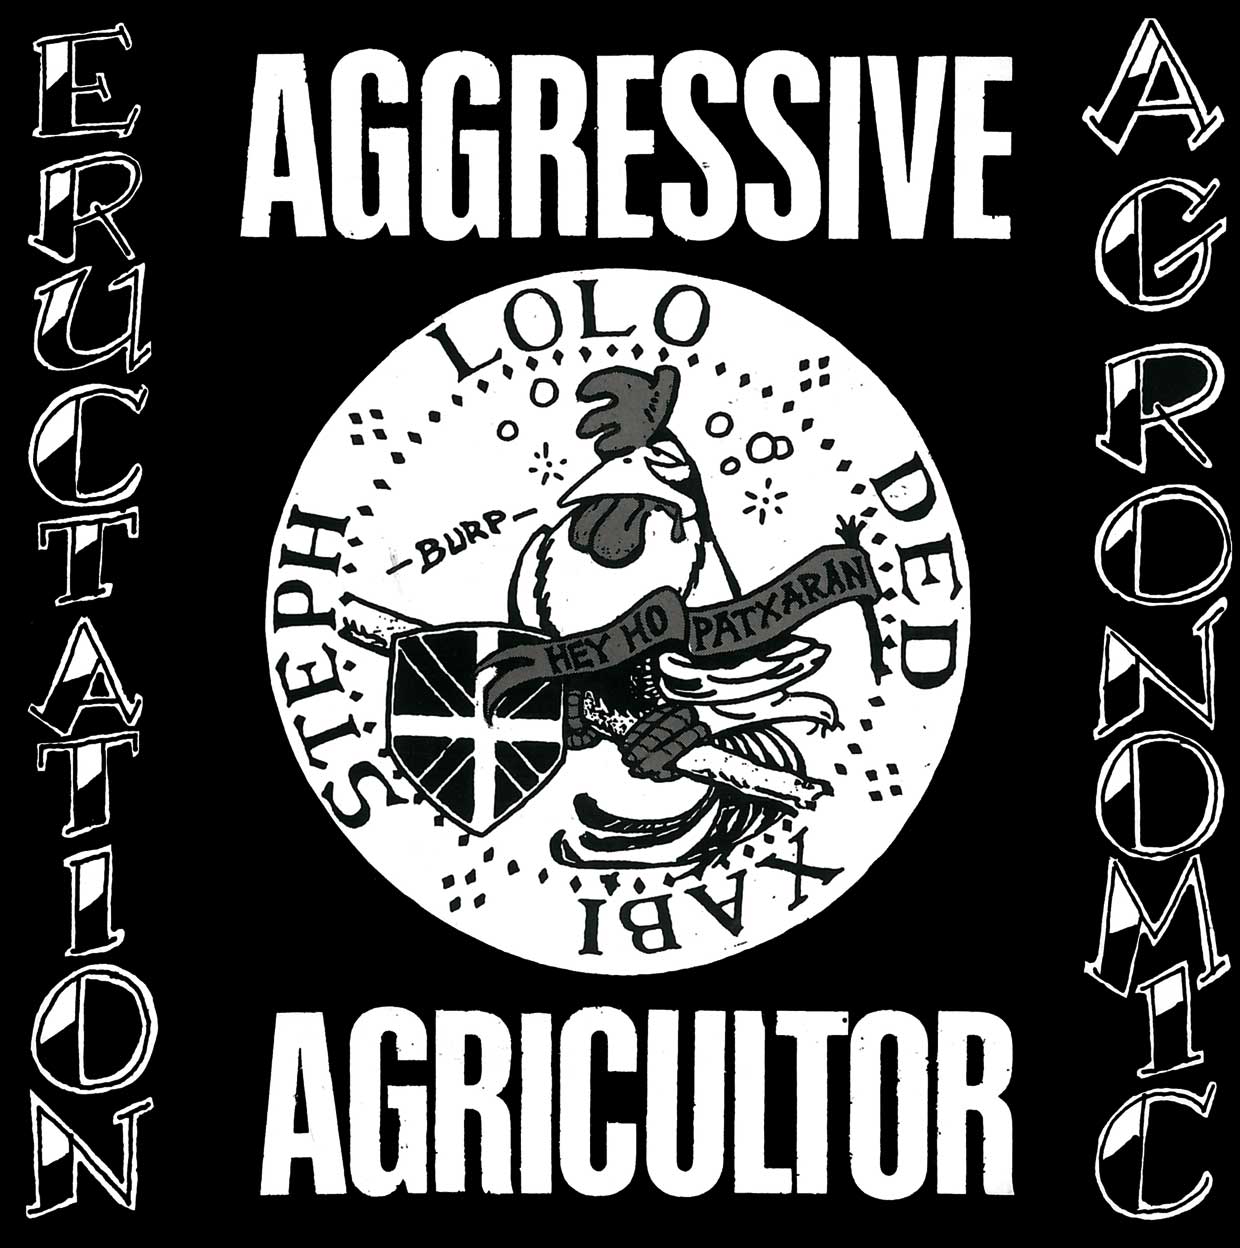 AGGRESSIVE AGRICULTOR "Eructation agronomic" - LP